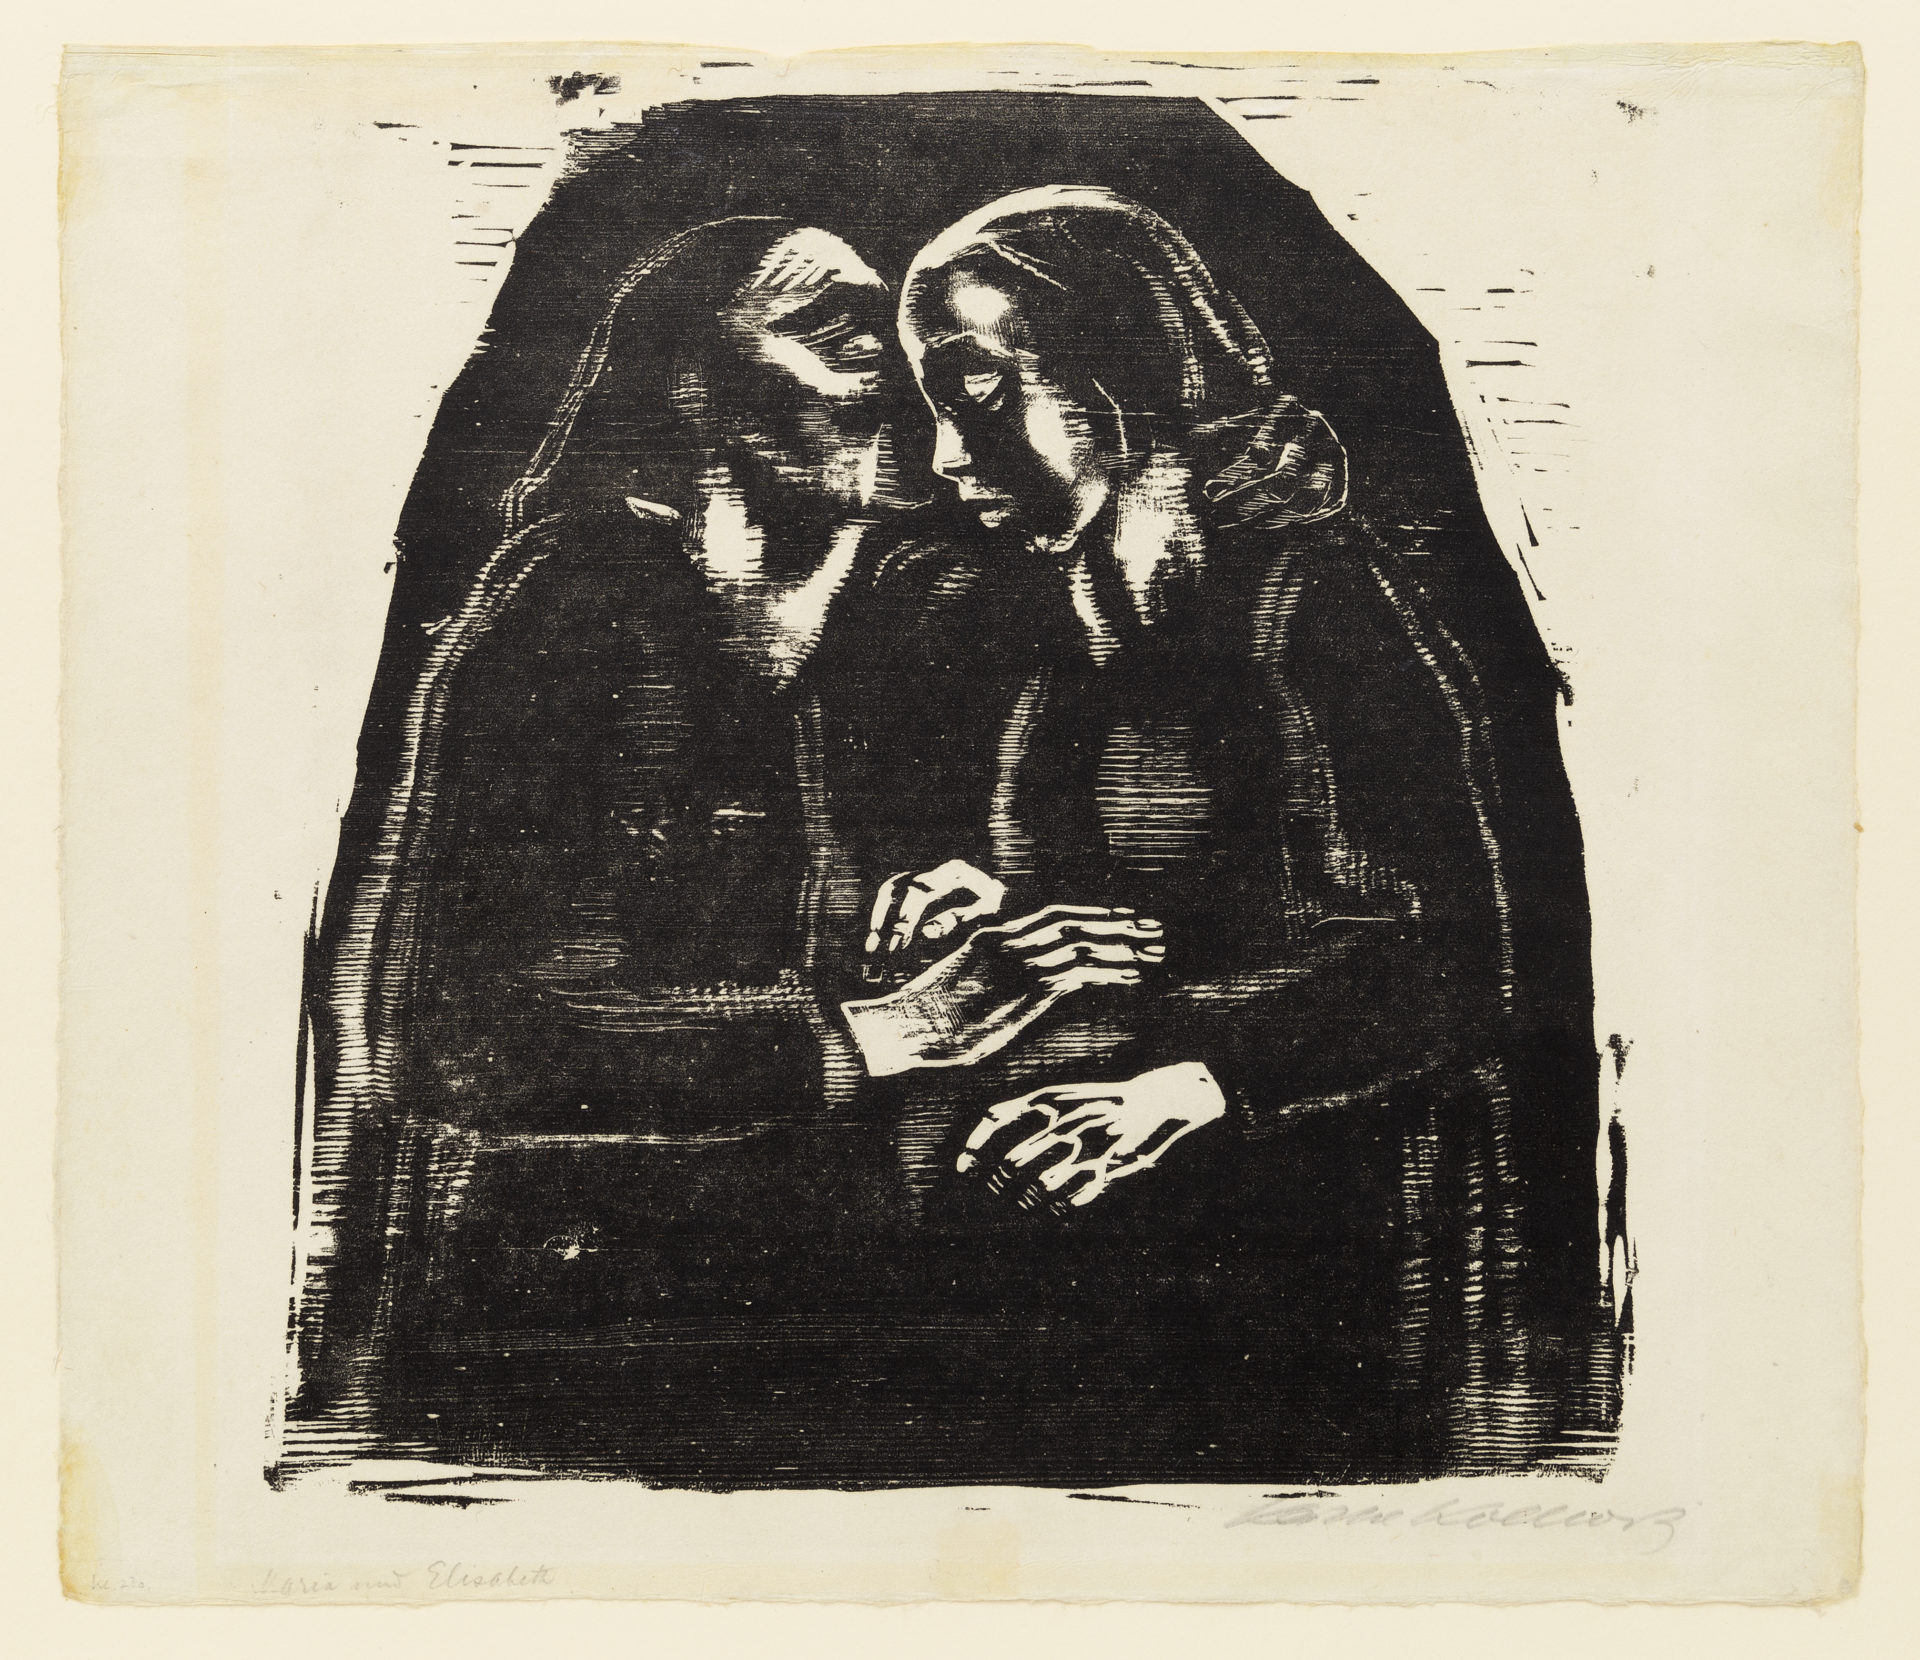 Maria und Elisabeth, 1928, Woodcut Image: 14 x 13 inches (35.6 x 33 cm) Paper: 15 1/2 x 18 inches (39.4 x 45.7 cm) Edition of 150